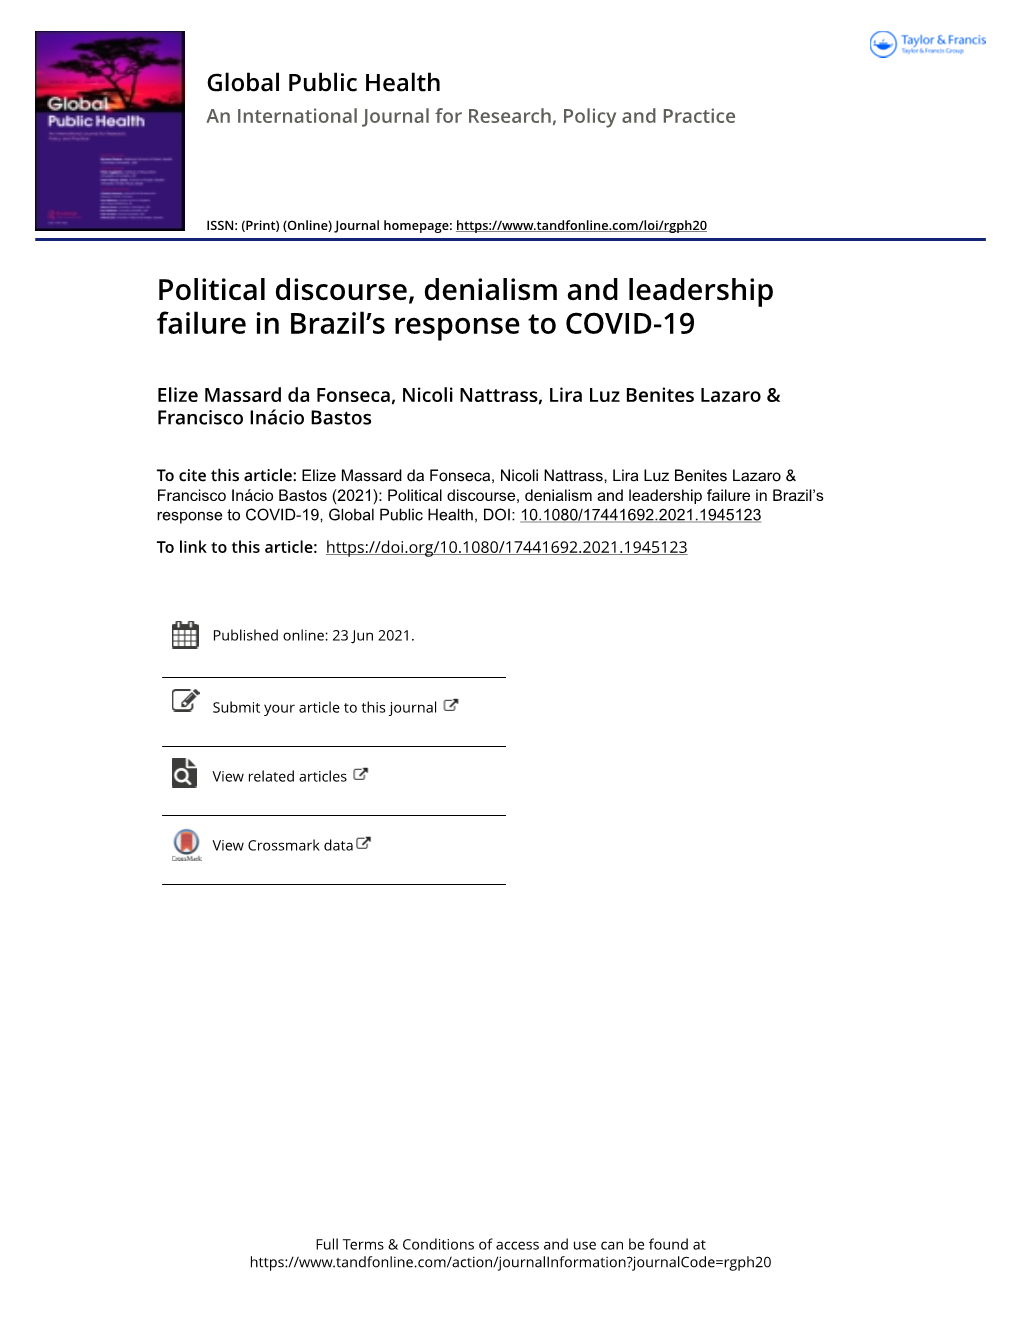 Political Discourse, Denialism and Leadership Failure in Brazil's